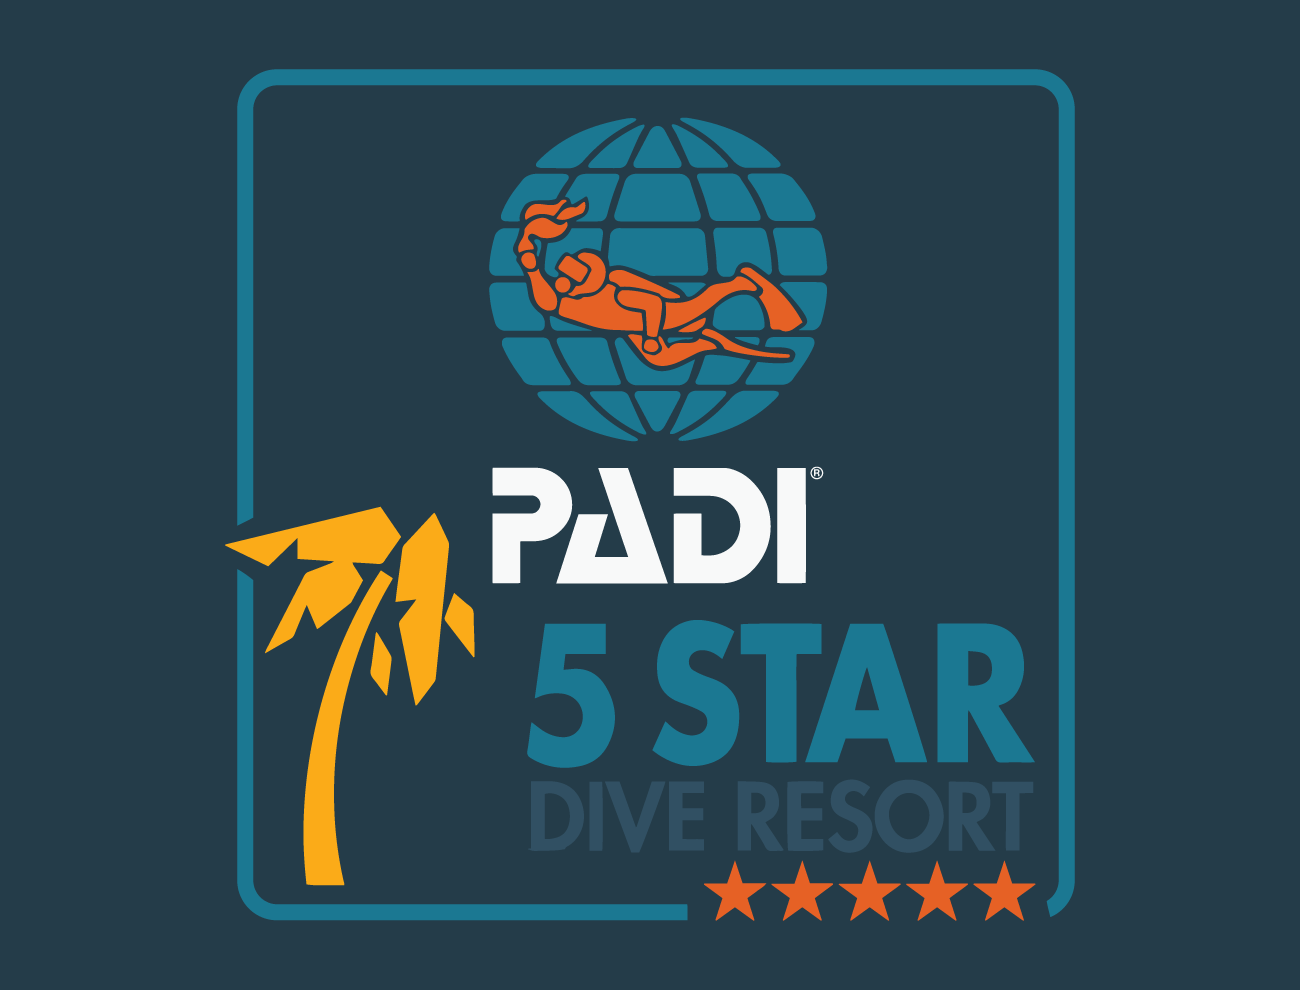 PADI 5 starts dive resort